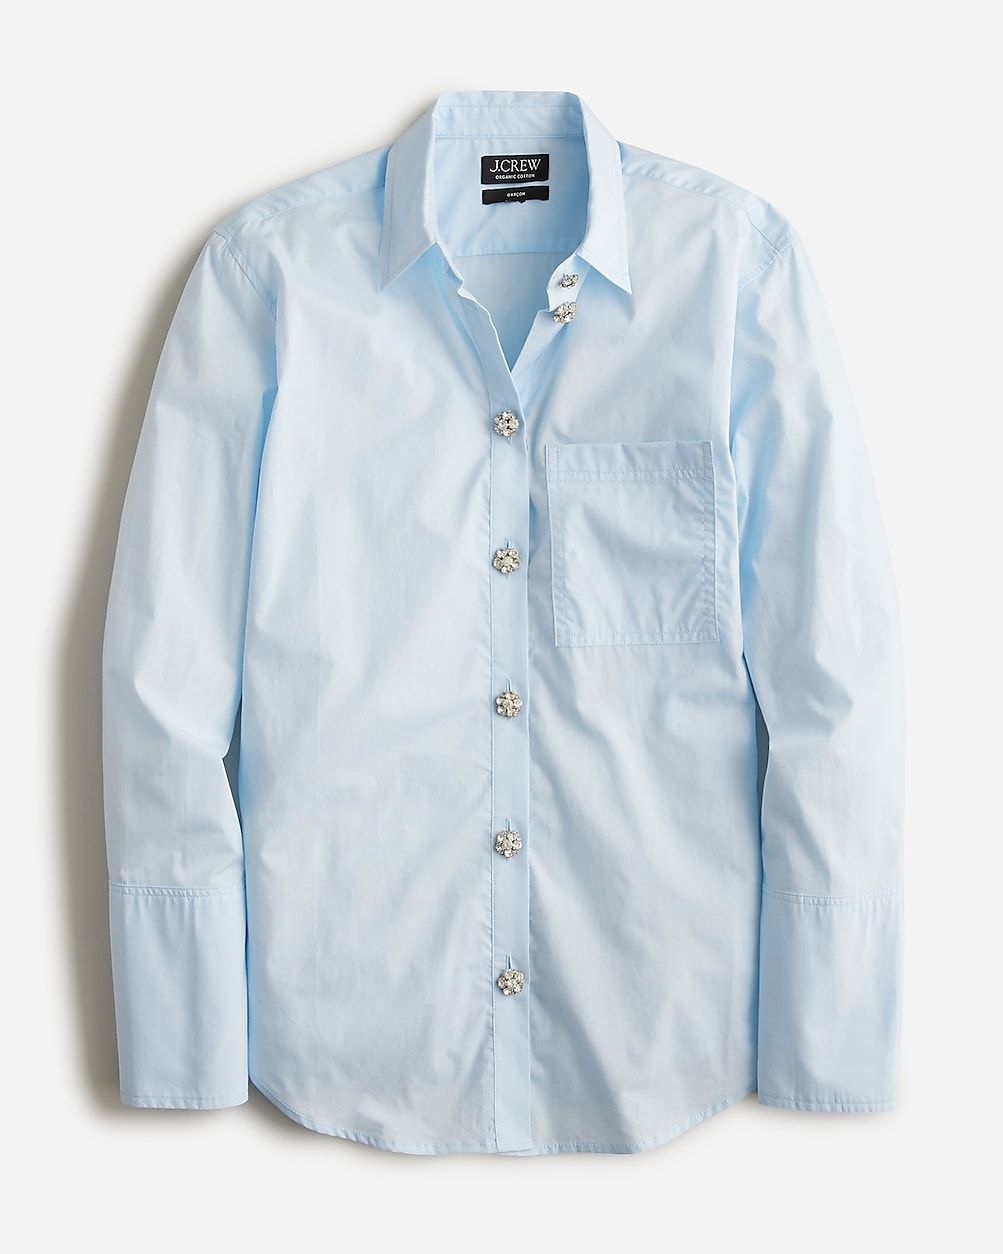 Garçon cotton poplin shirt with jewel buttons | J.Crew US